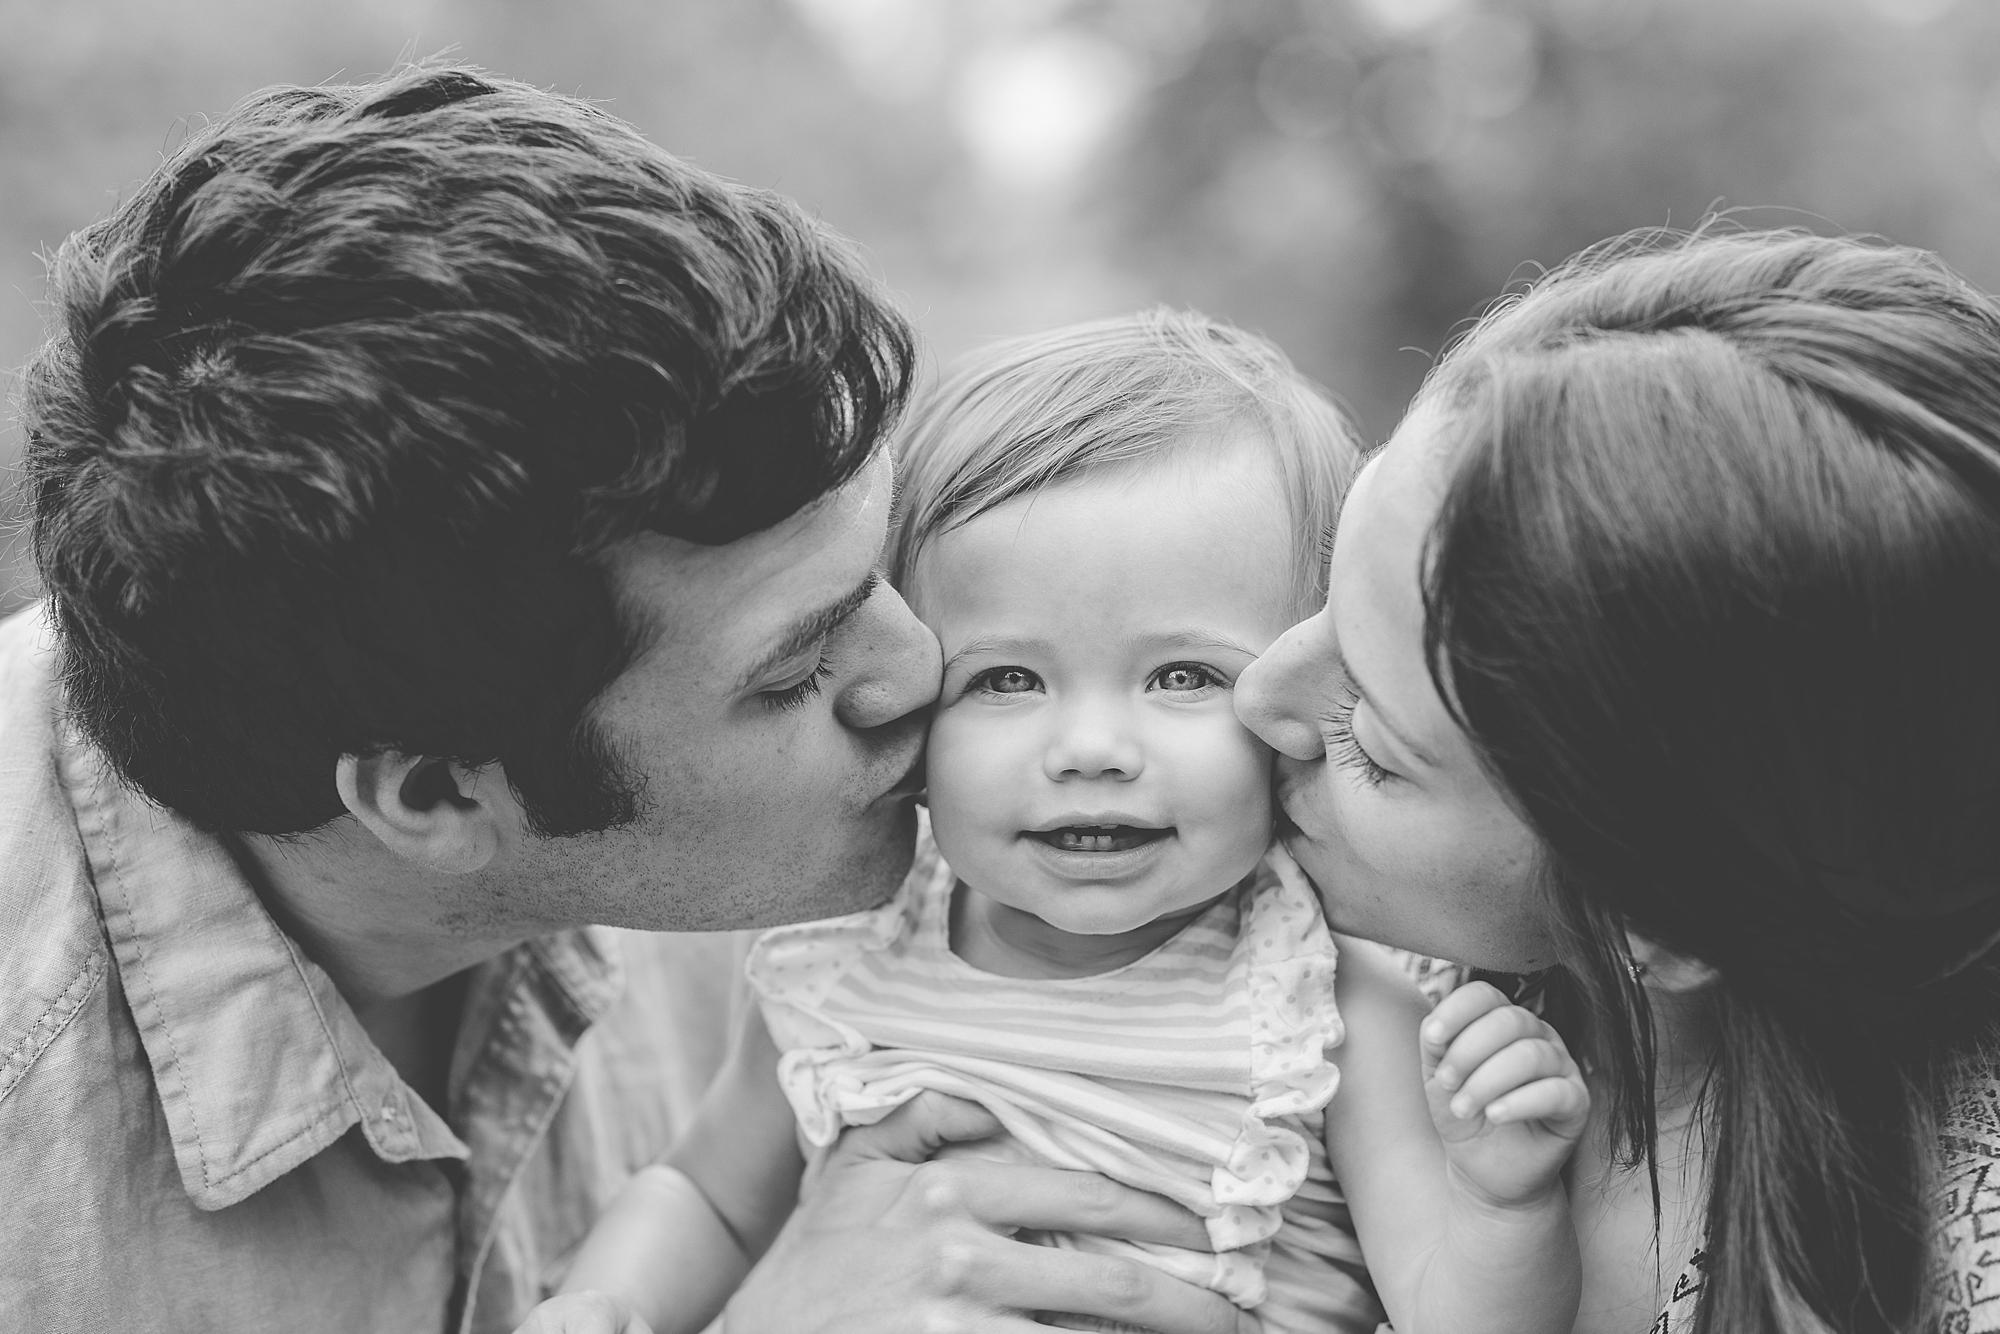 parents kiss toddler on cheek during milestone photos